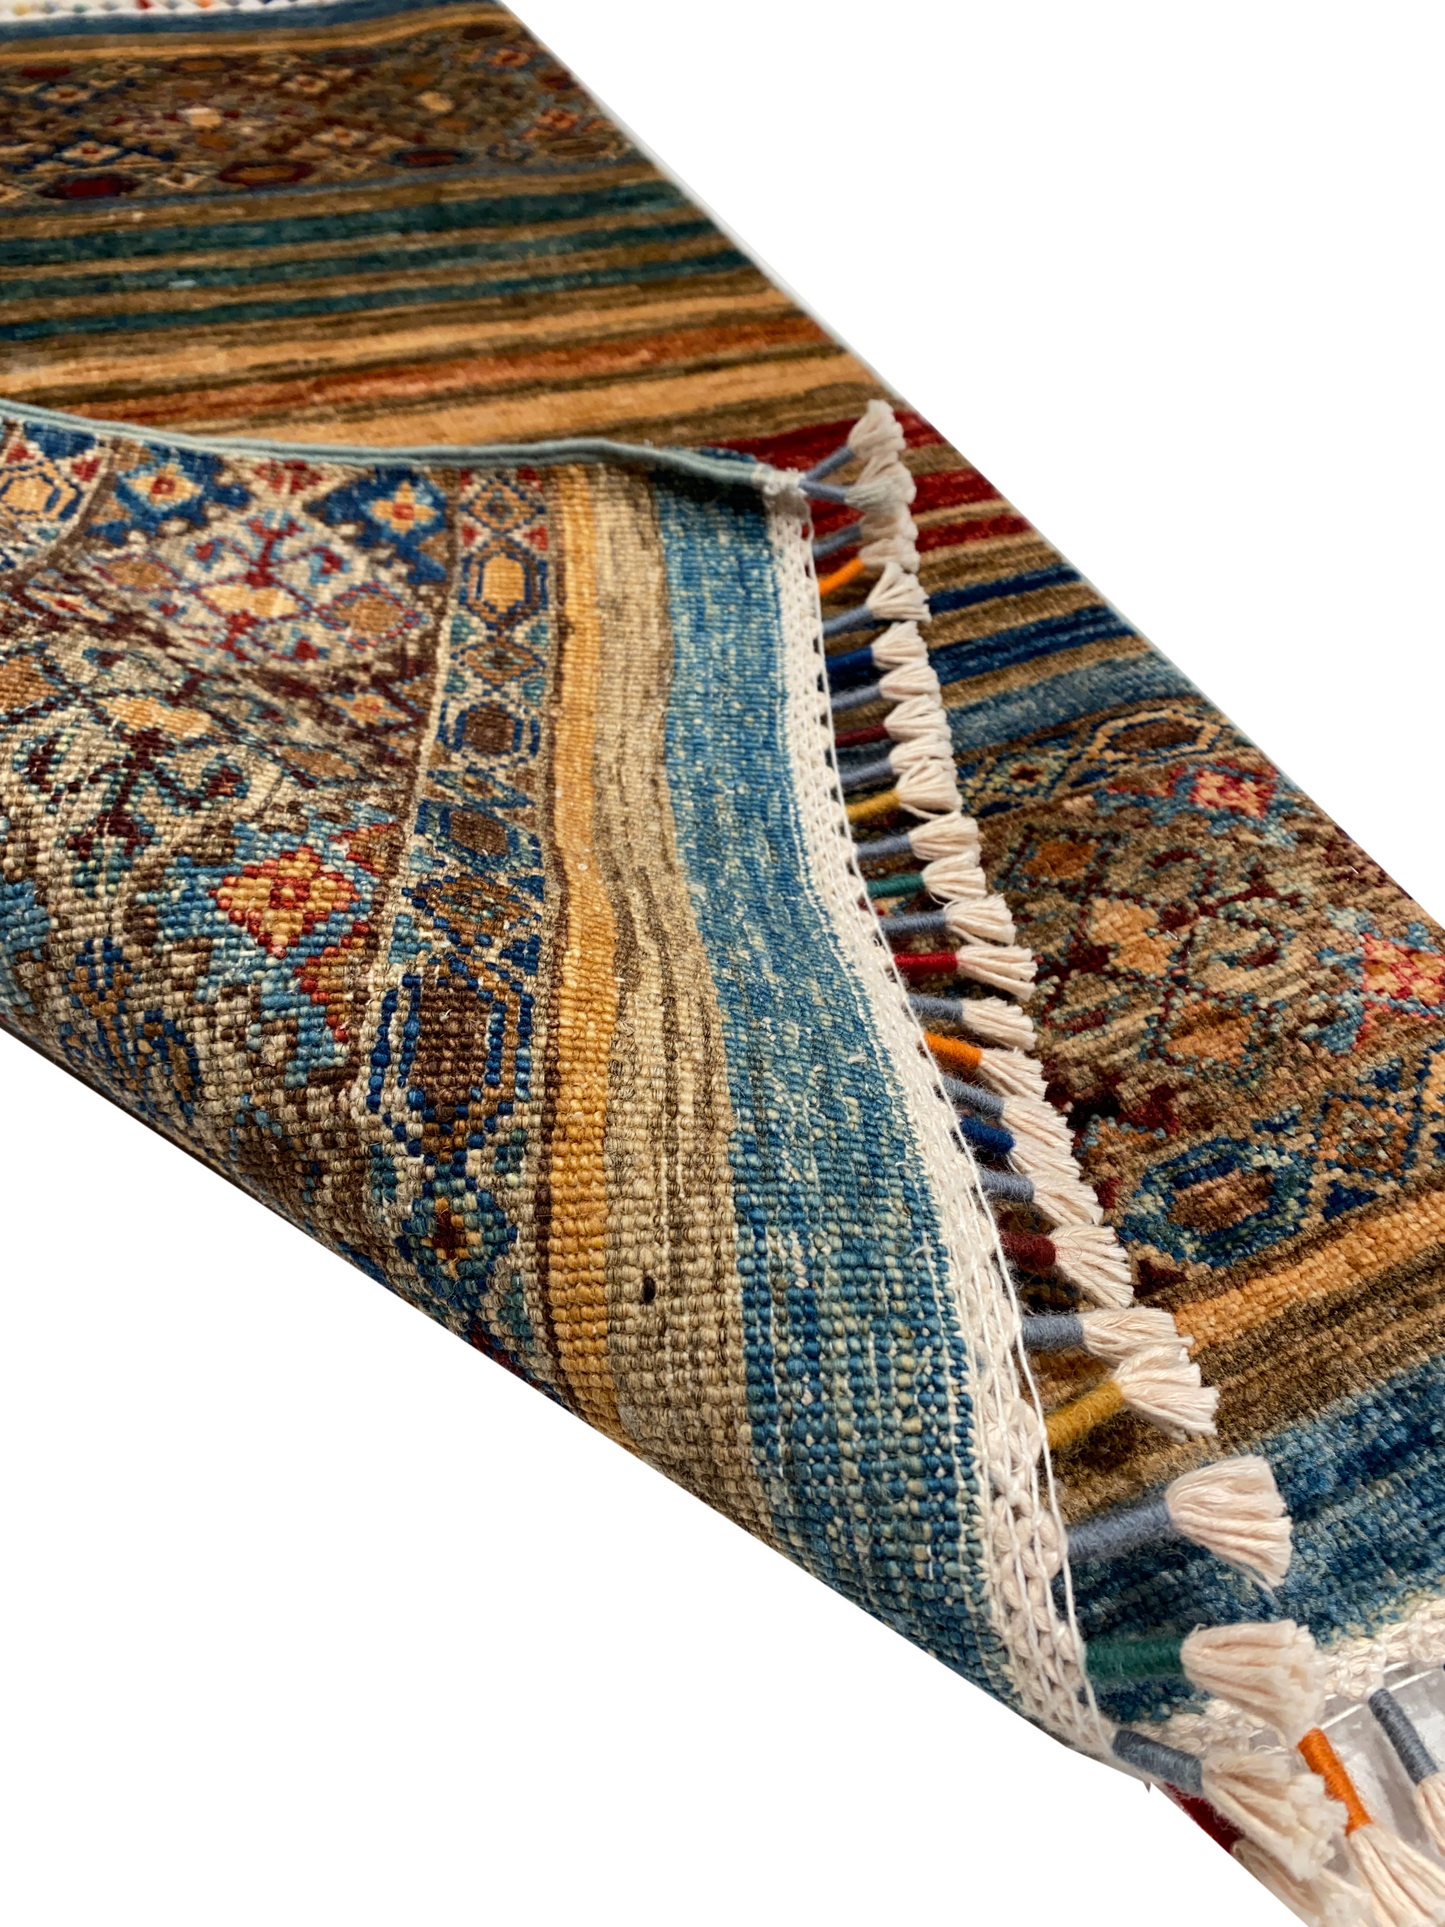 Şirvan Carpet 94 X 63 cm